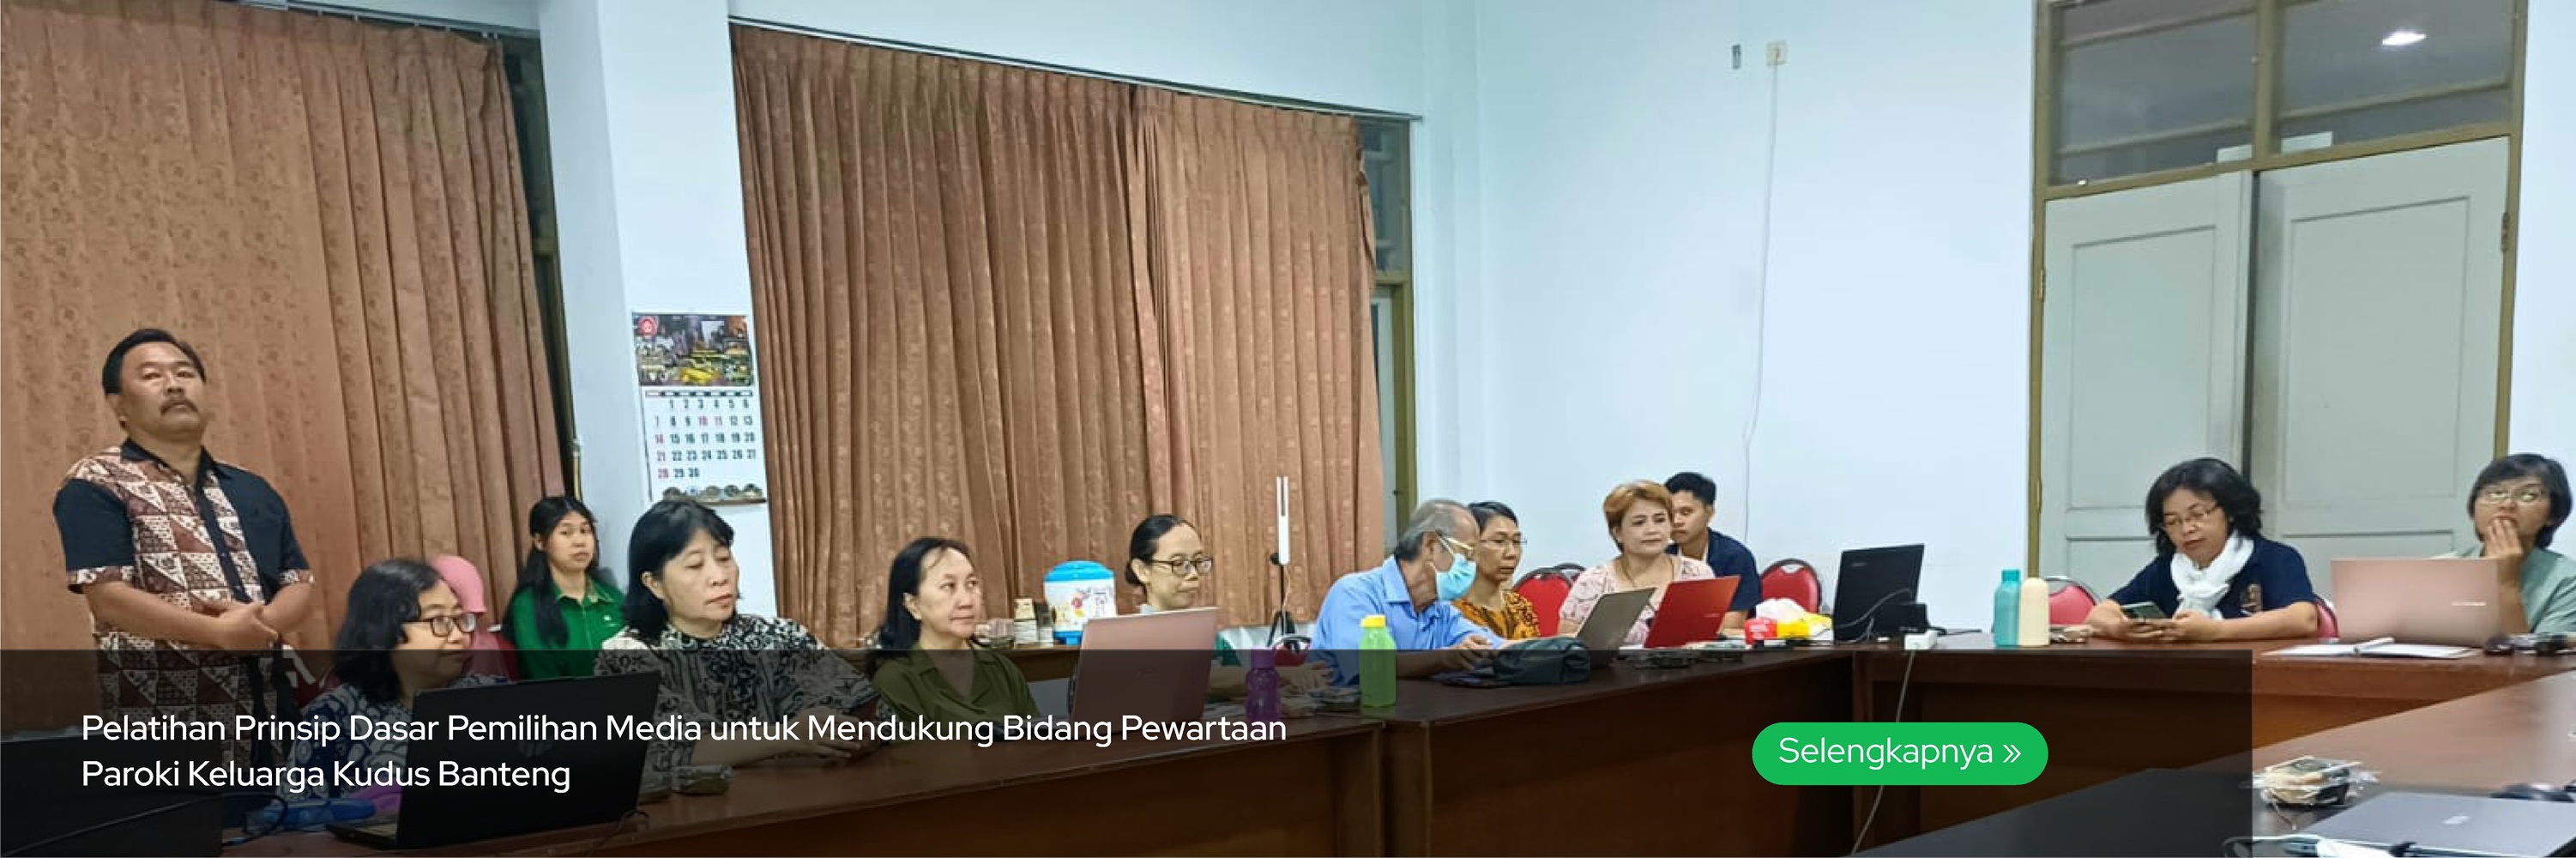 Pelatihan Prinsip Dasar Pemilihan Media untuk Mendukung Bidang Pewartaan Paroki Keluarga Kudus Banteng - LPPM USD